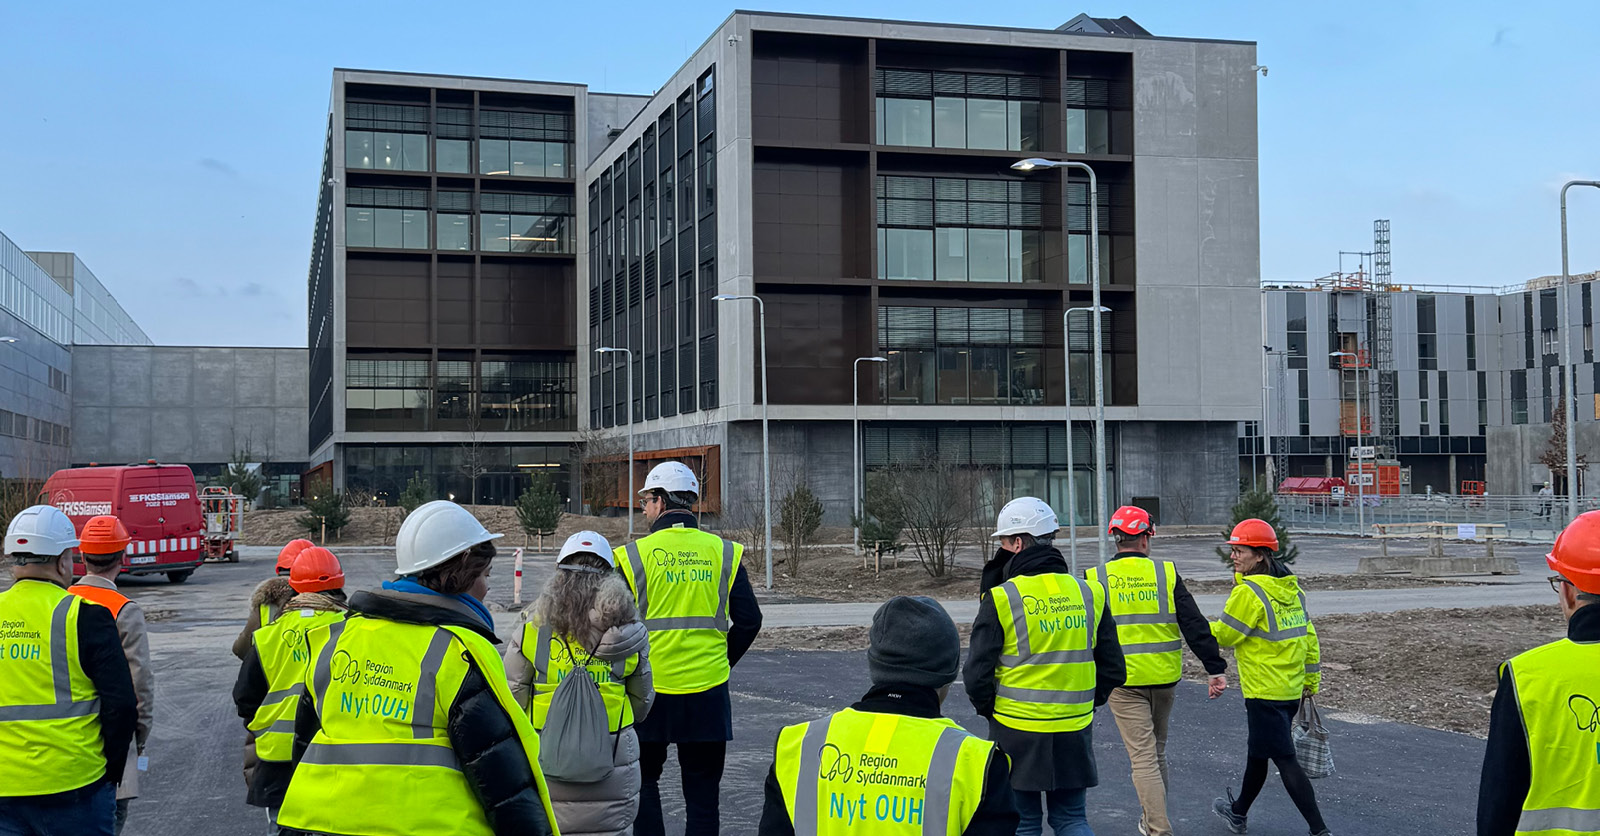 Odense universitets hospital (OUH) and Danfoss Fire Safety